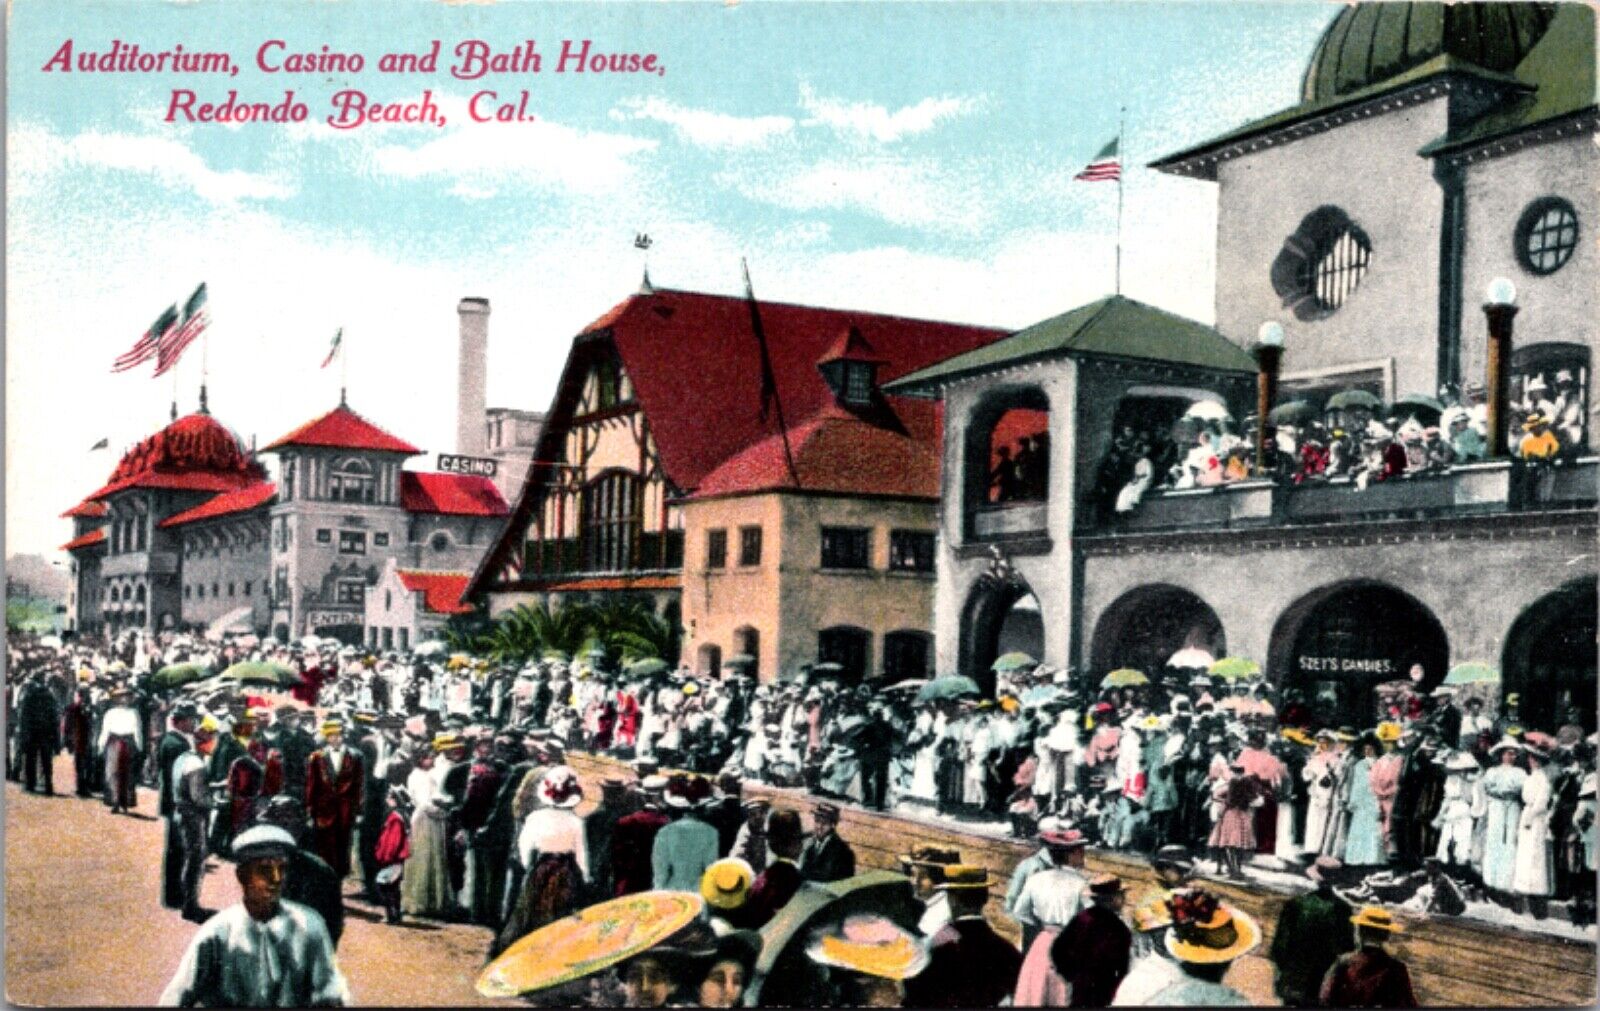 Postcard Auditorium, Casino and Bath House in Redondo Beach, California